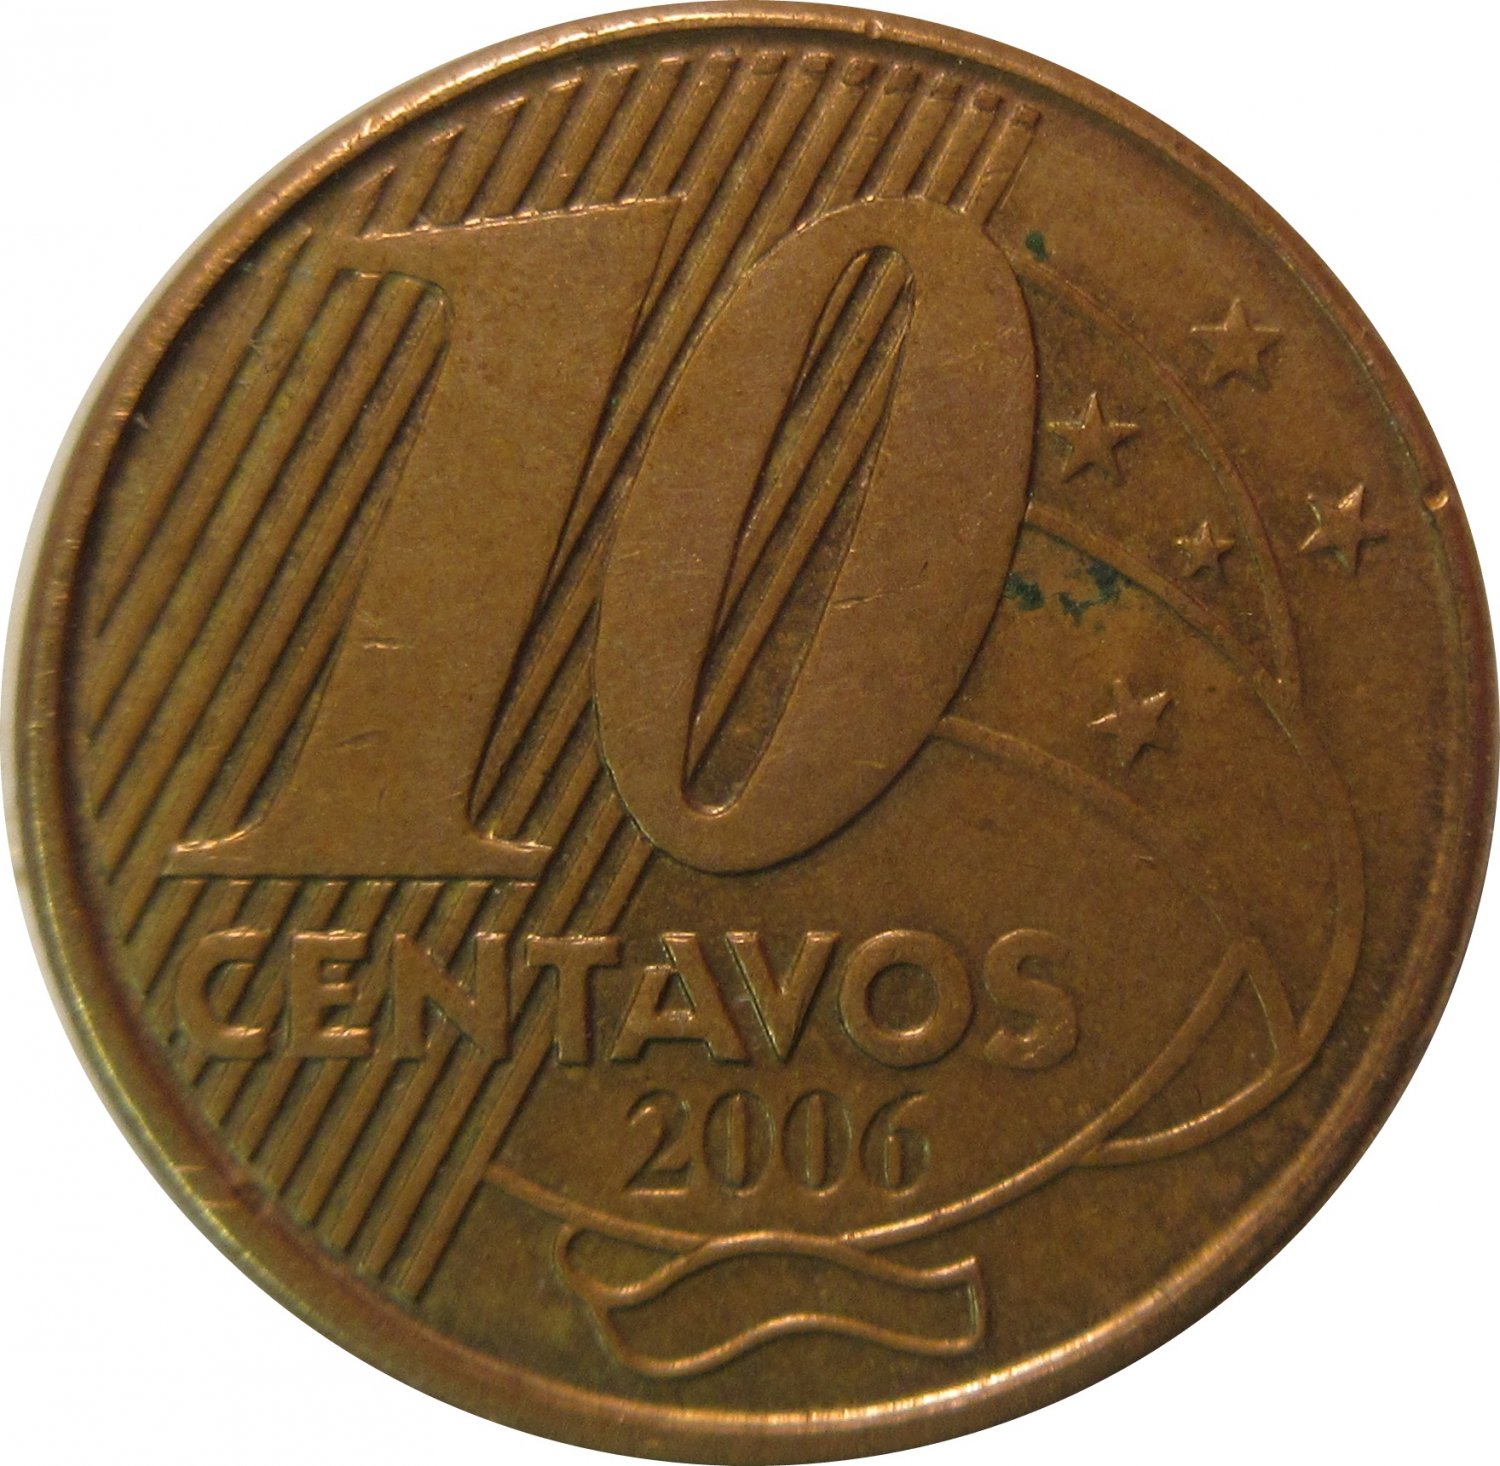 2006 Brazil 10 Centavo